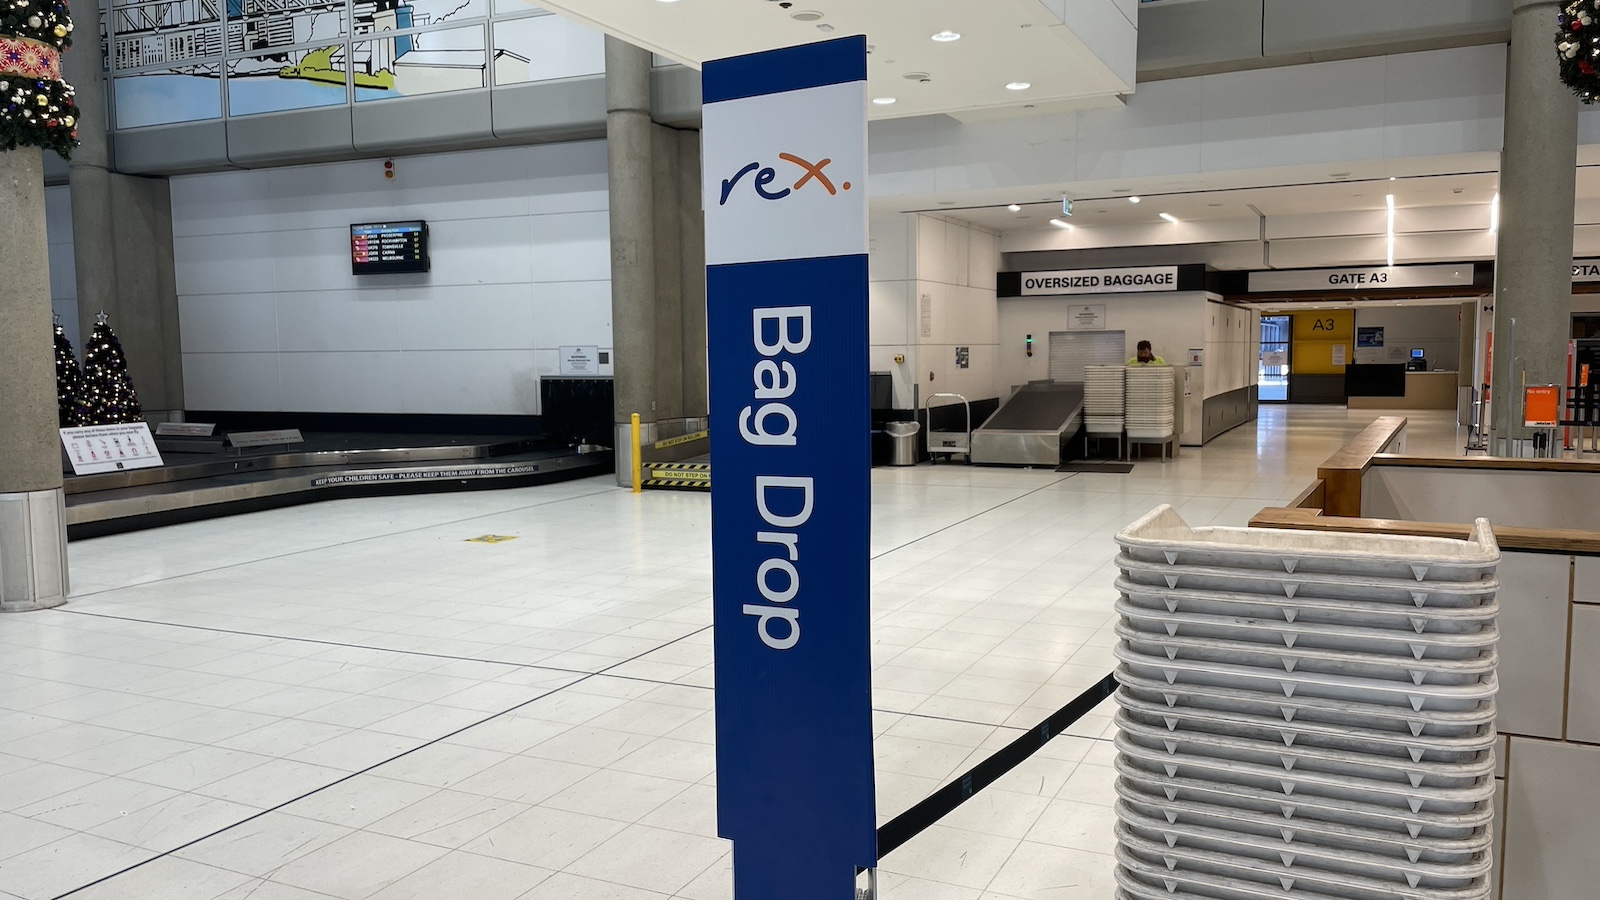 Rex Airlines Brisbane to Sydney Brisbane Airport Bag Drop Sign Point Hacks